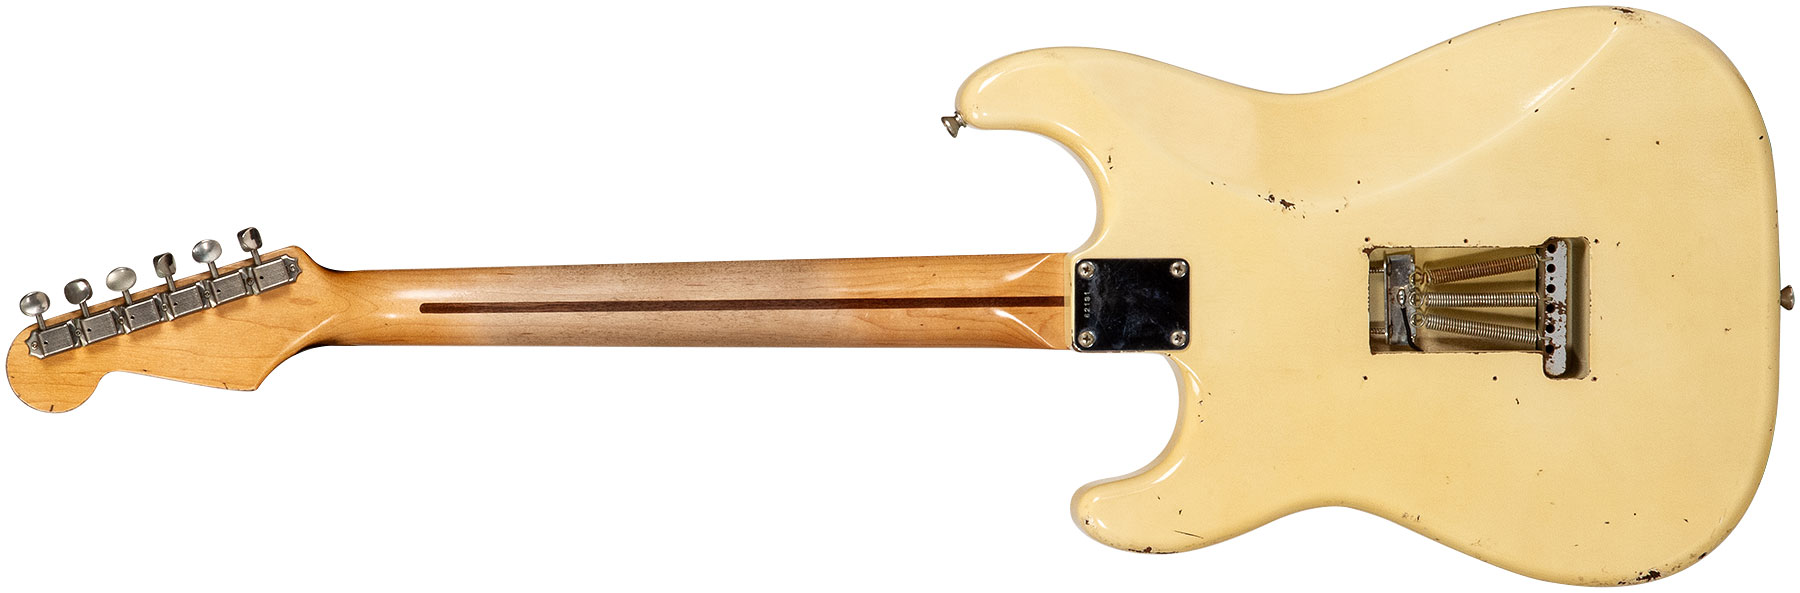 Rebelrelic S-series 55 3s Trem Mn #62191 - Light Aged Banana - Guitarra eléctrica con forma de str. - Variation 1